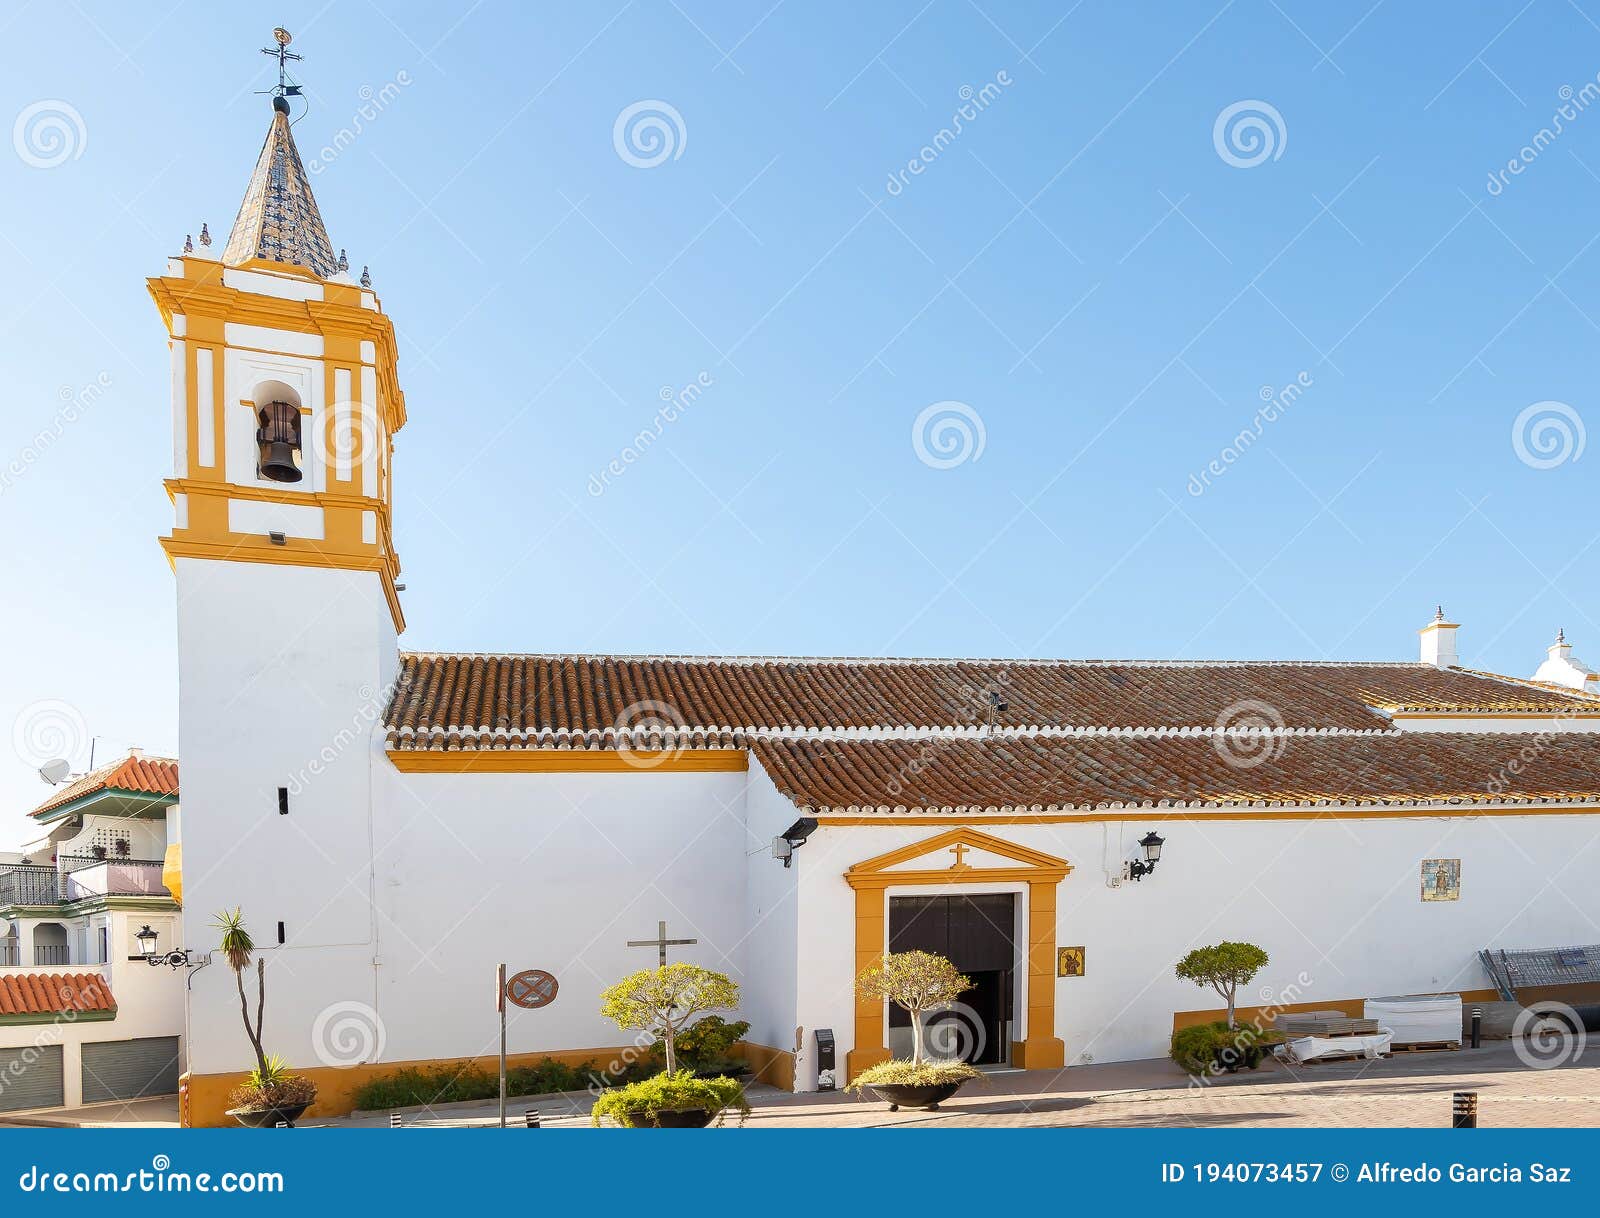 san vicente martir church in the town of lucena del puerto, huelva, andalusia, spain